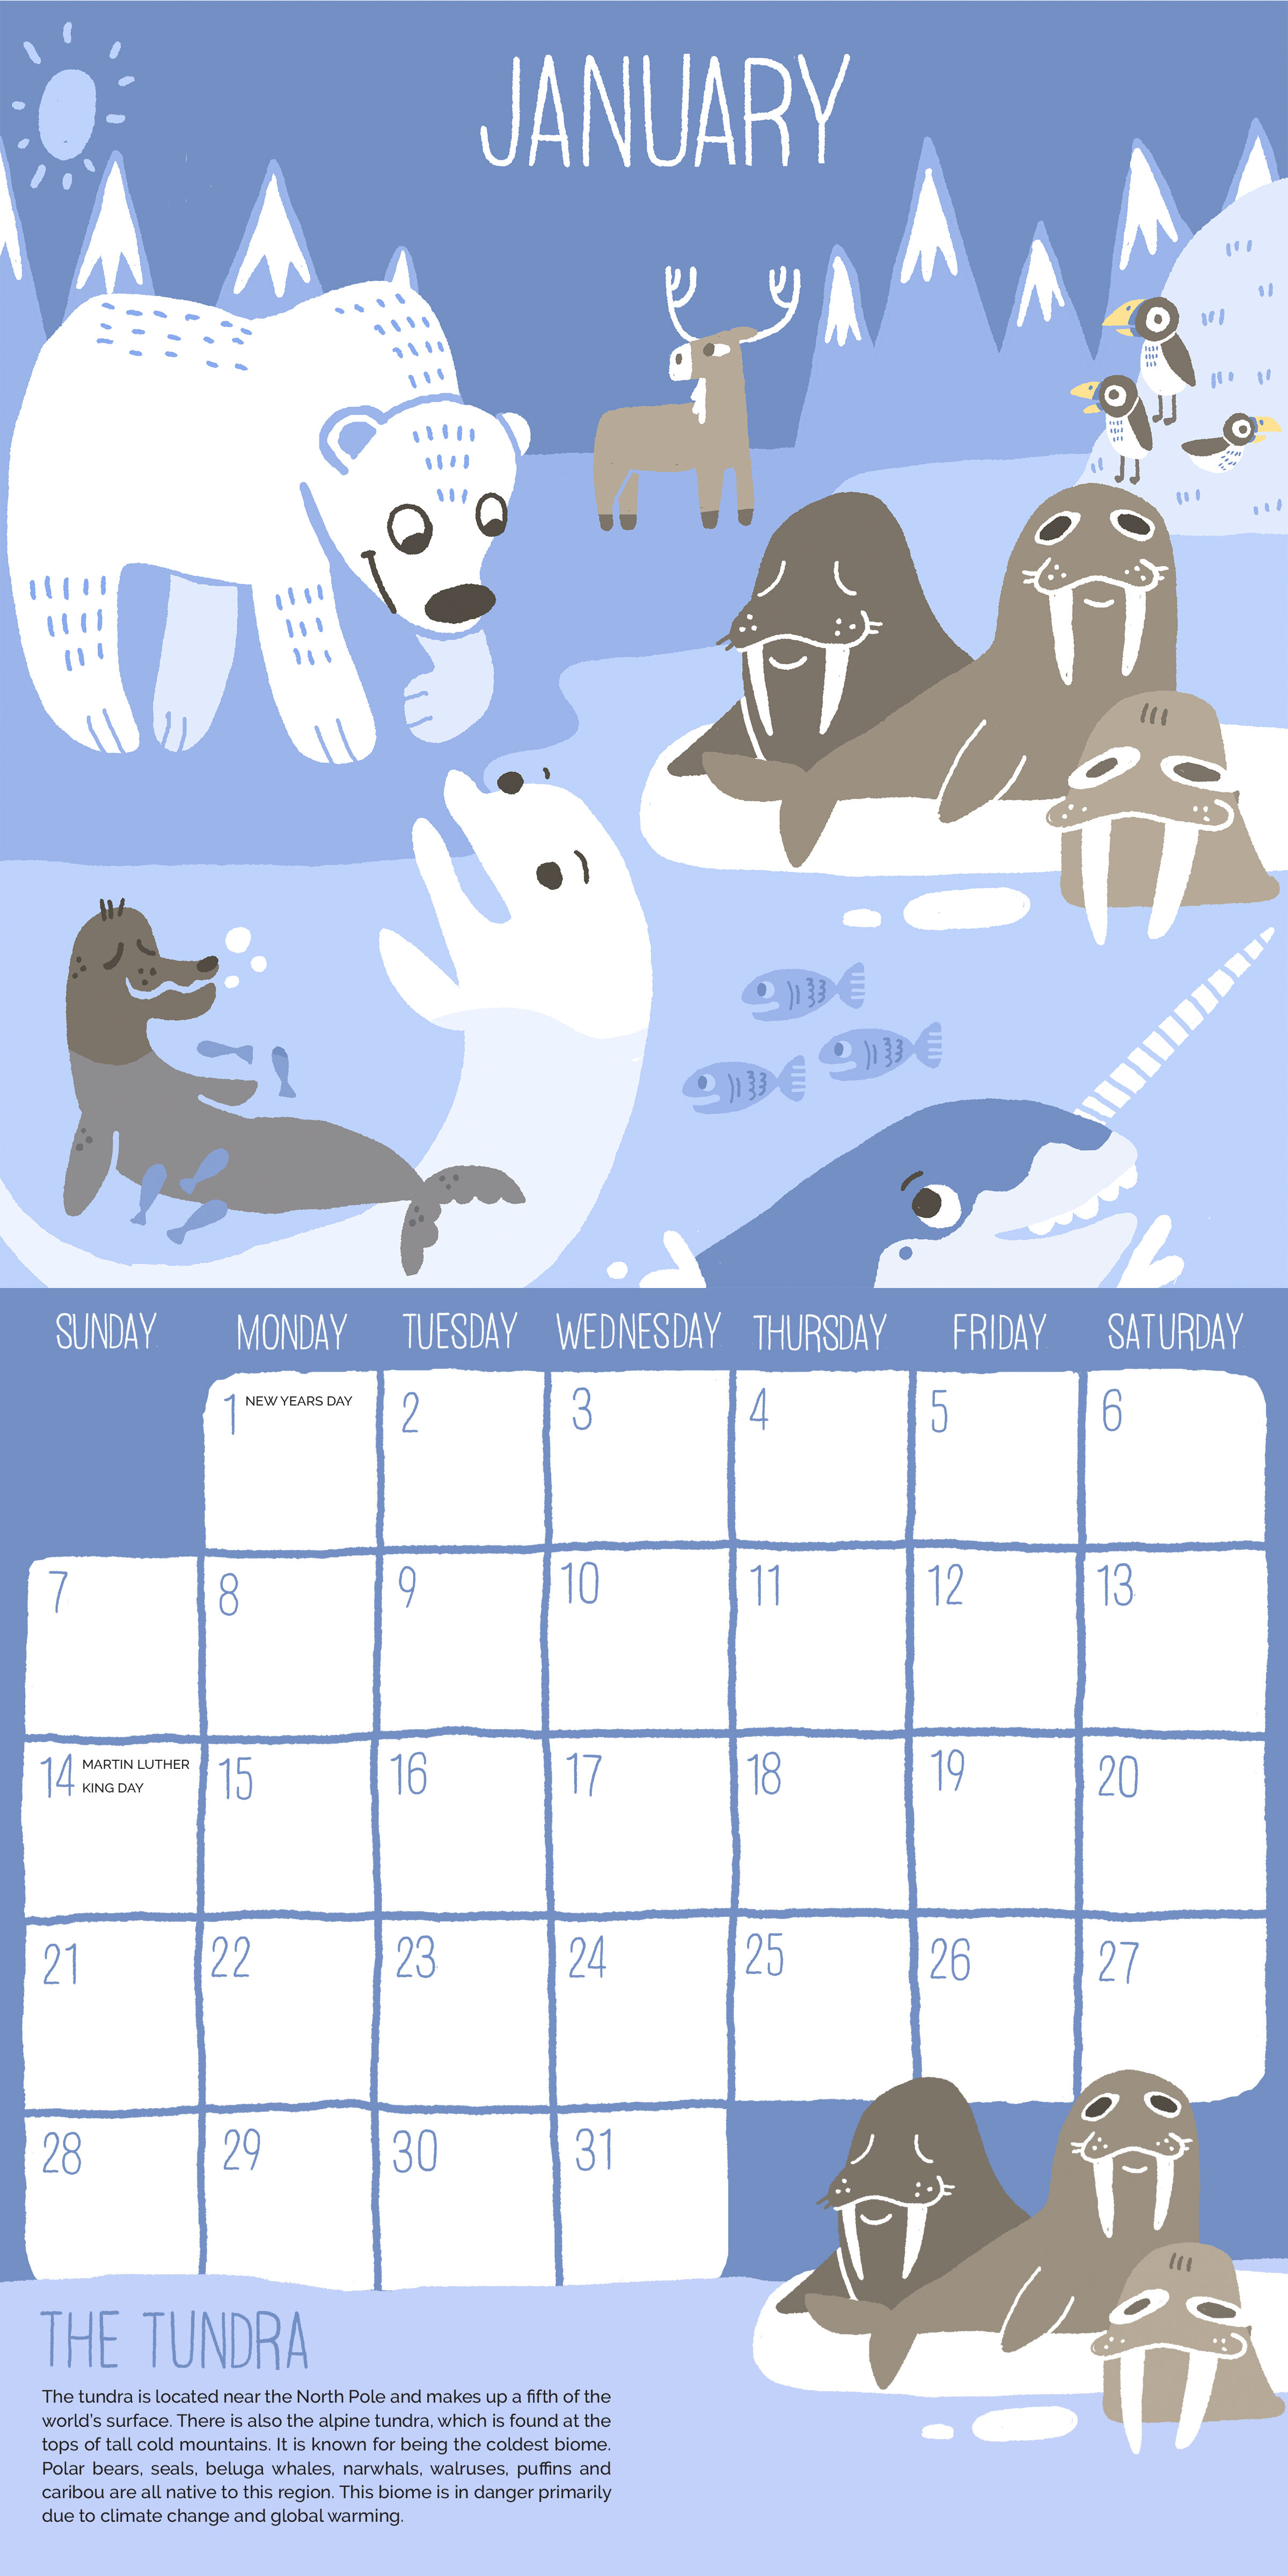 Call of the Wild Calendar: January (Tundra)